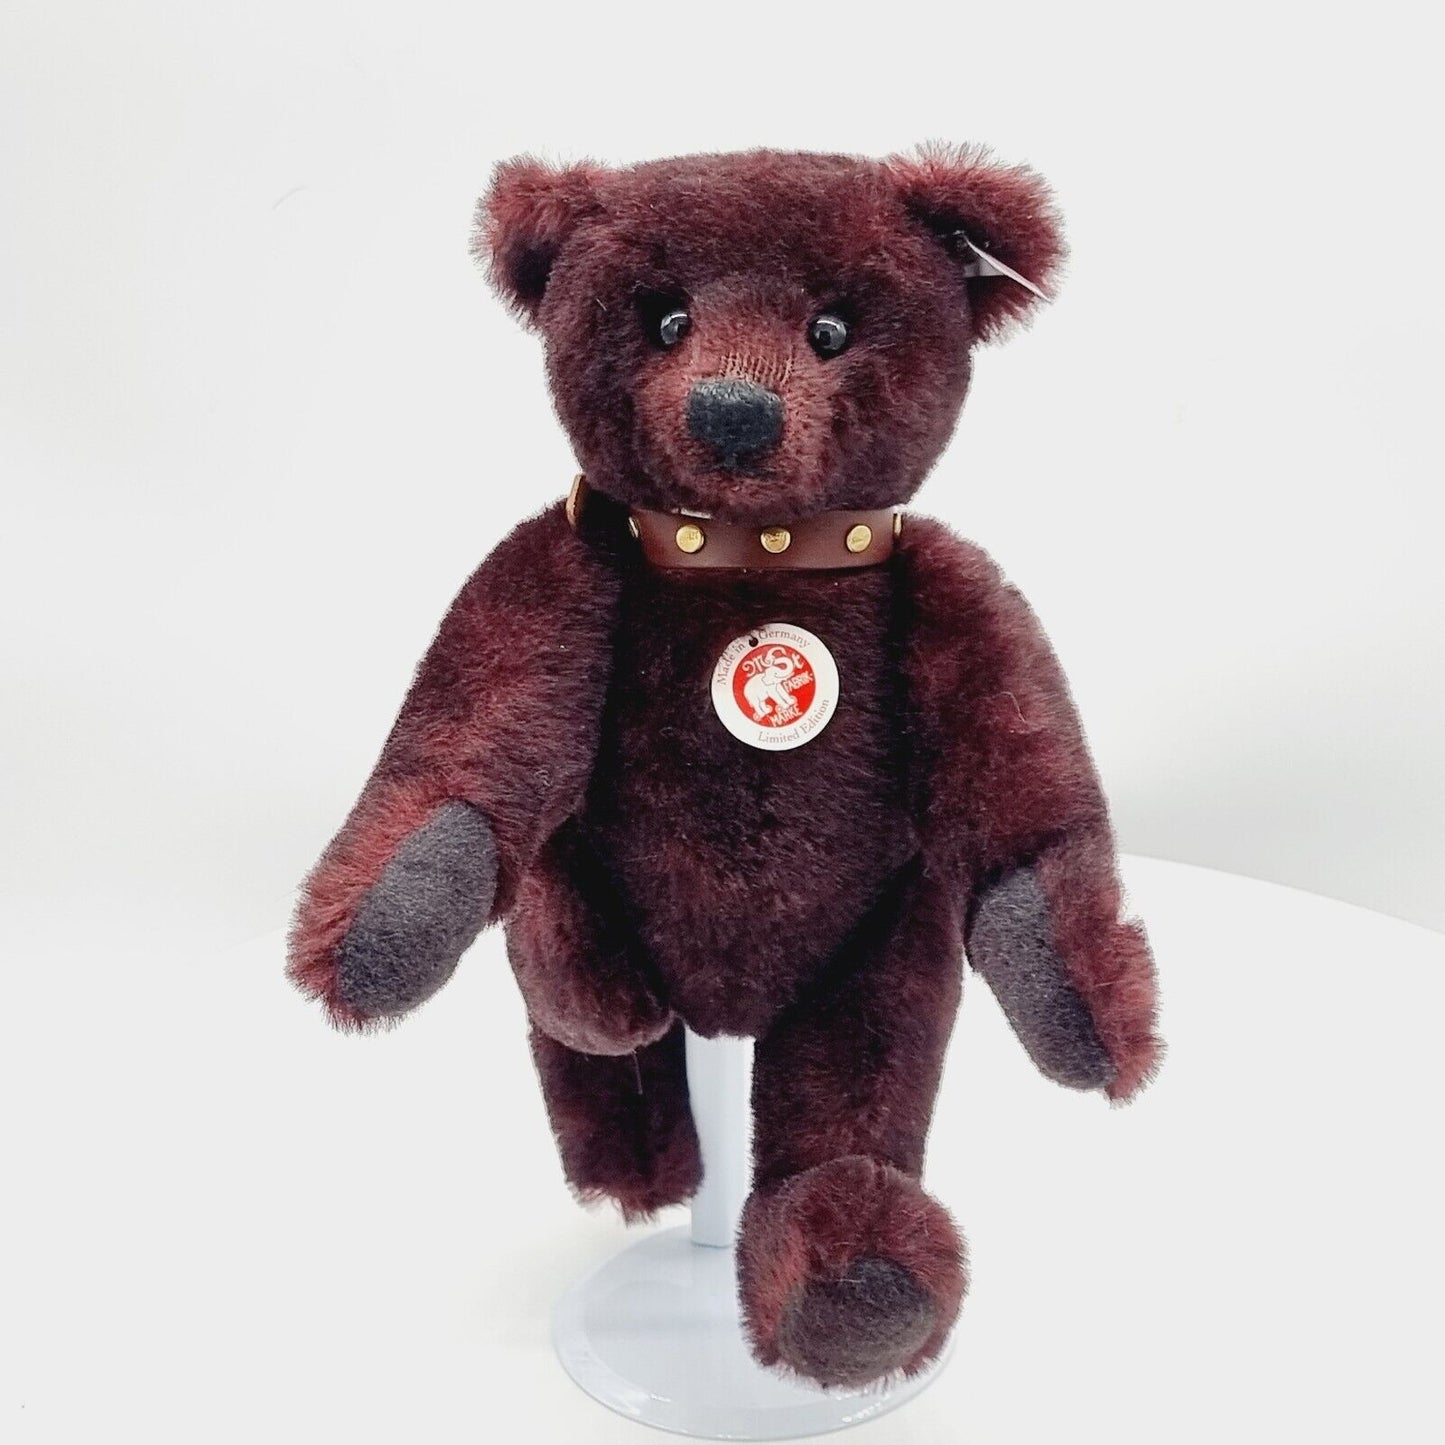 Steiff  038754 Teddybär mit Halsband limitiert 2009 aus 2009 32cm Mohair